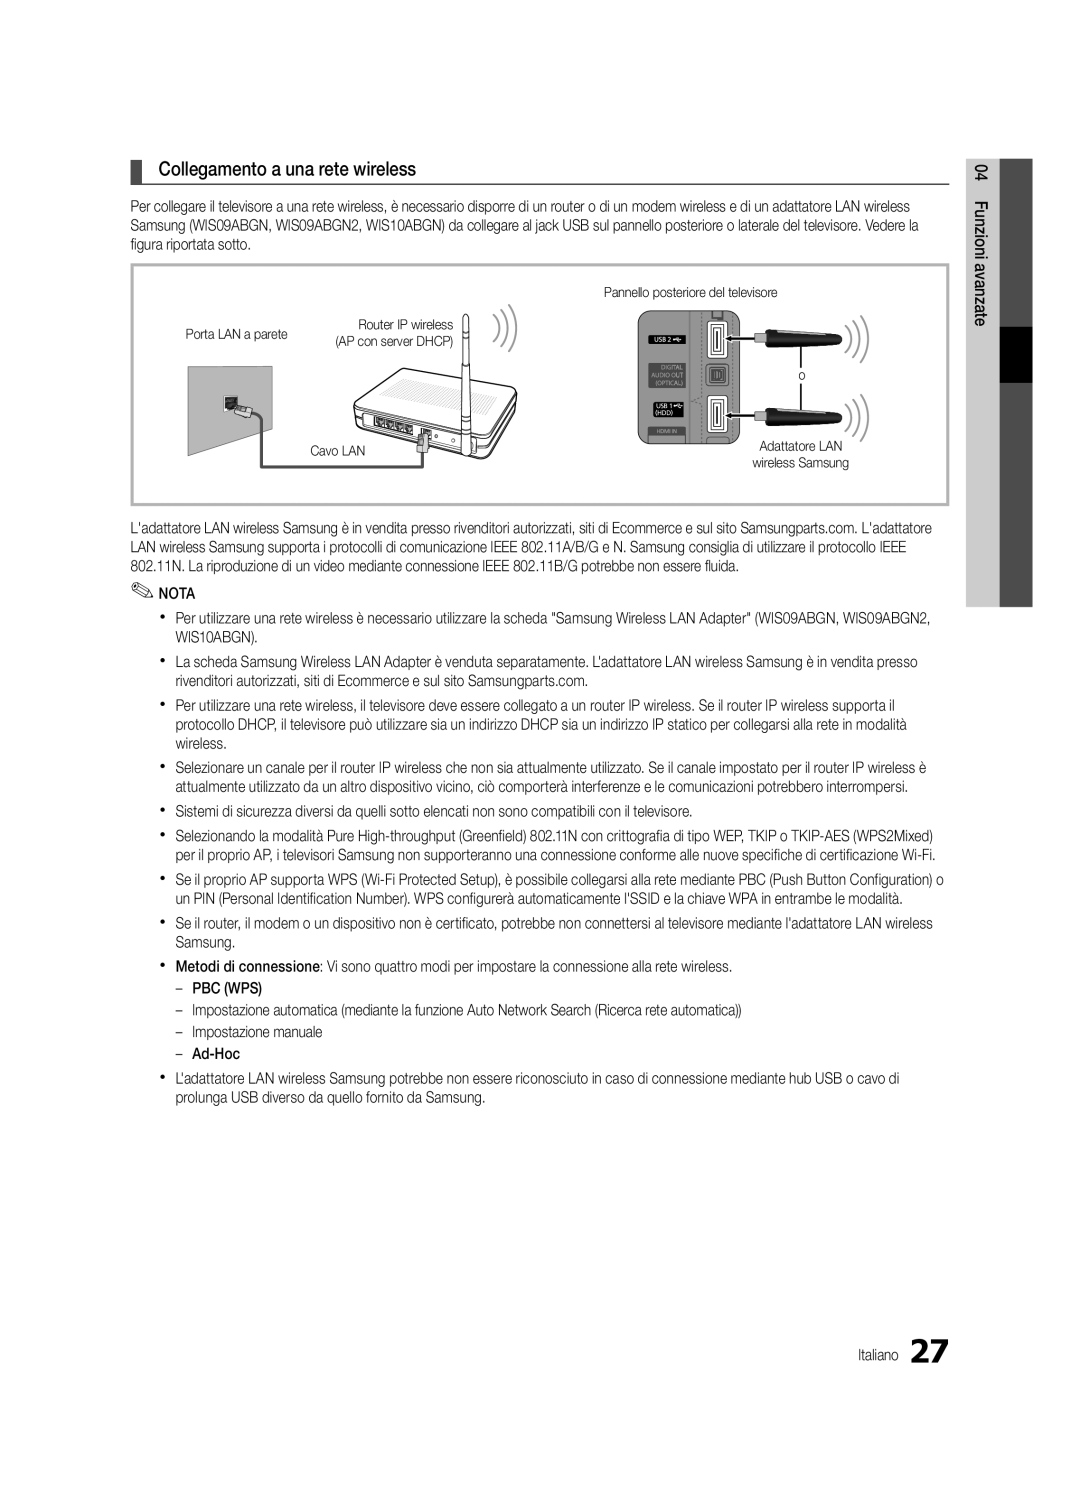 Samsung UE46C5700QSXZG, UE37C5700QSXZG manual Collegamento a una rete wireless, Cavo LAN, Adattatore LAN, wireless Samsung 